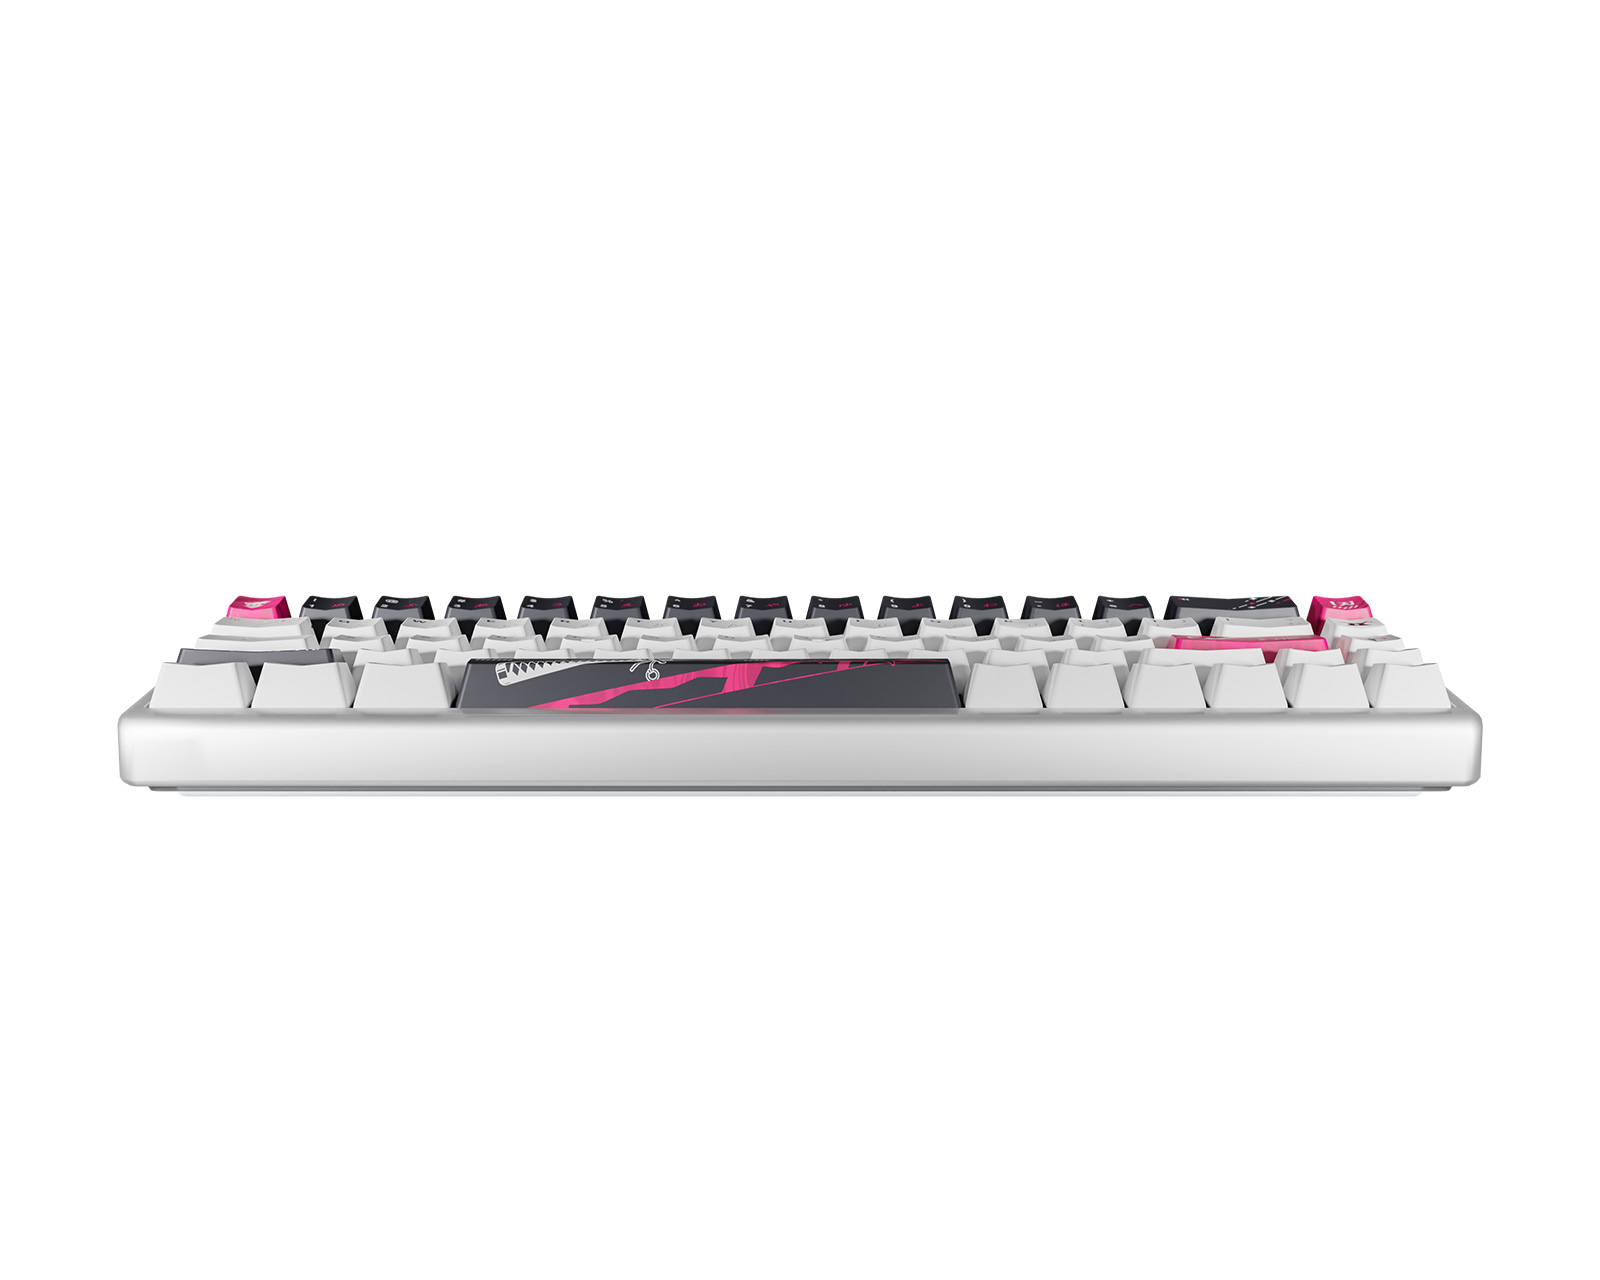 Yuki Aim Hall Effect Magnetic 65% Gaming Keyboard ANSI - Katana Edition